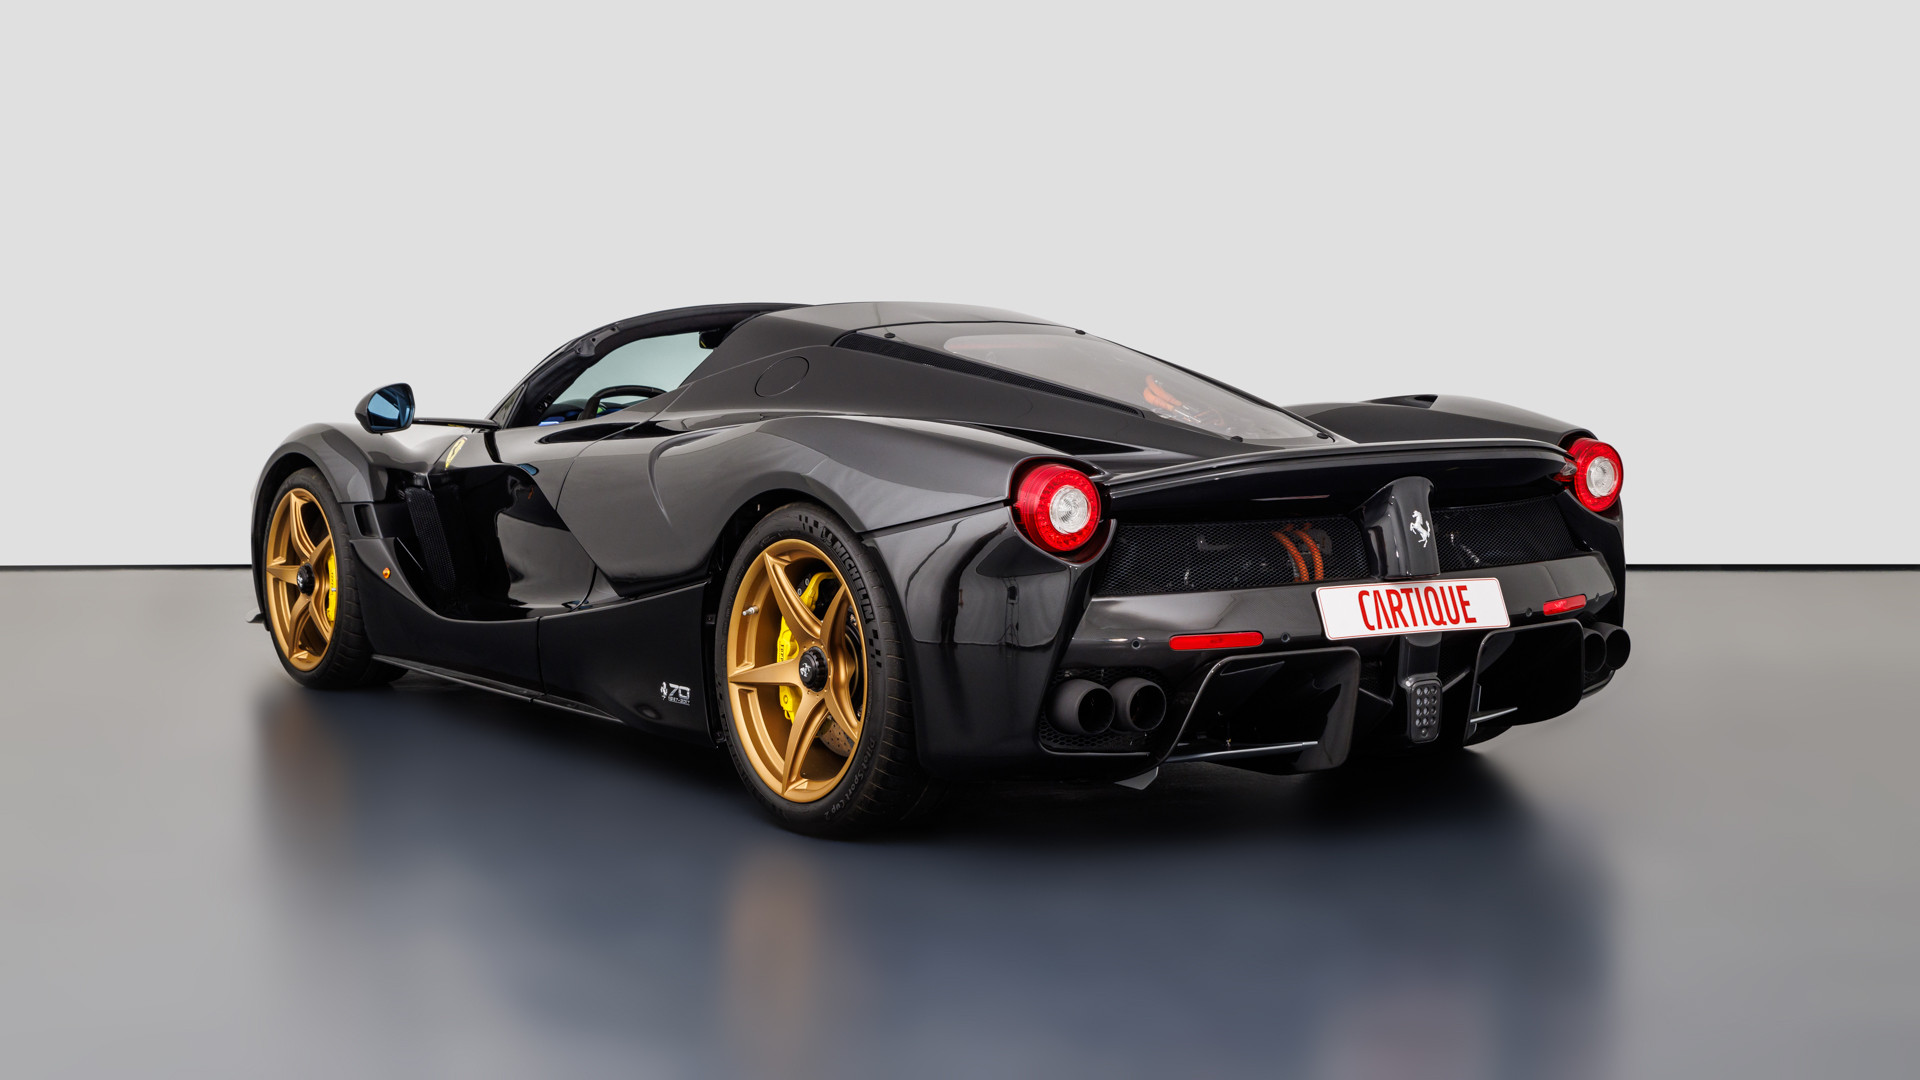 Siêu xe Ferrari LaFerrari mui trần được rao bán 6,5 triệu Euro